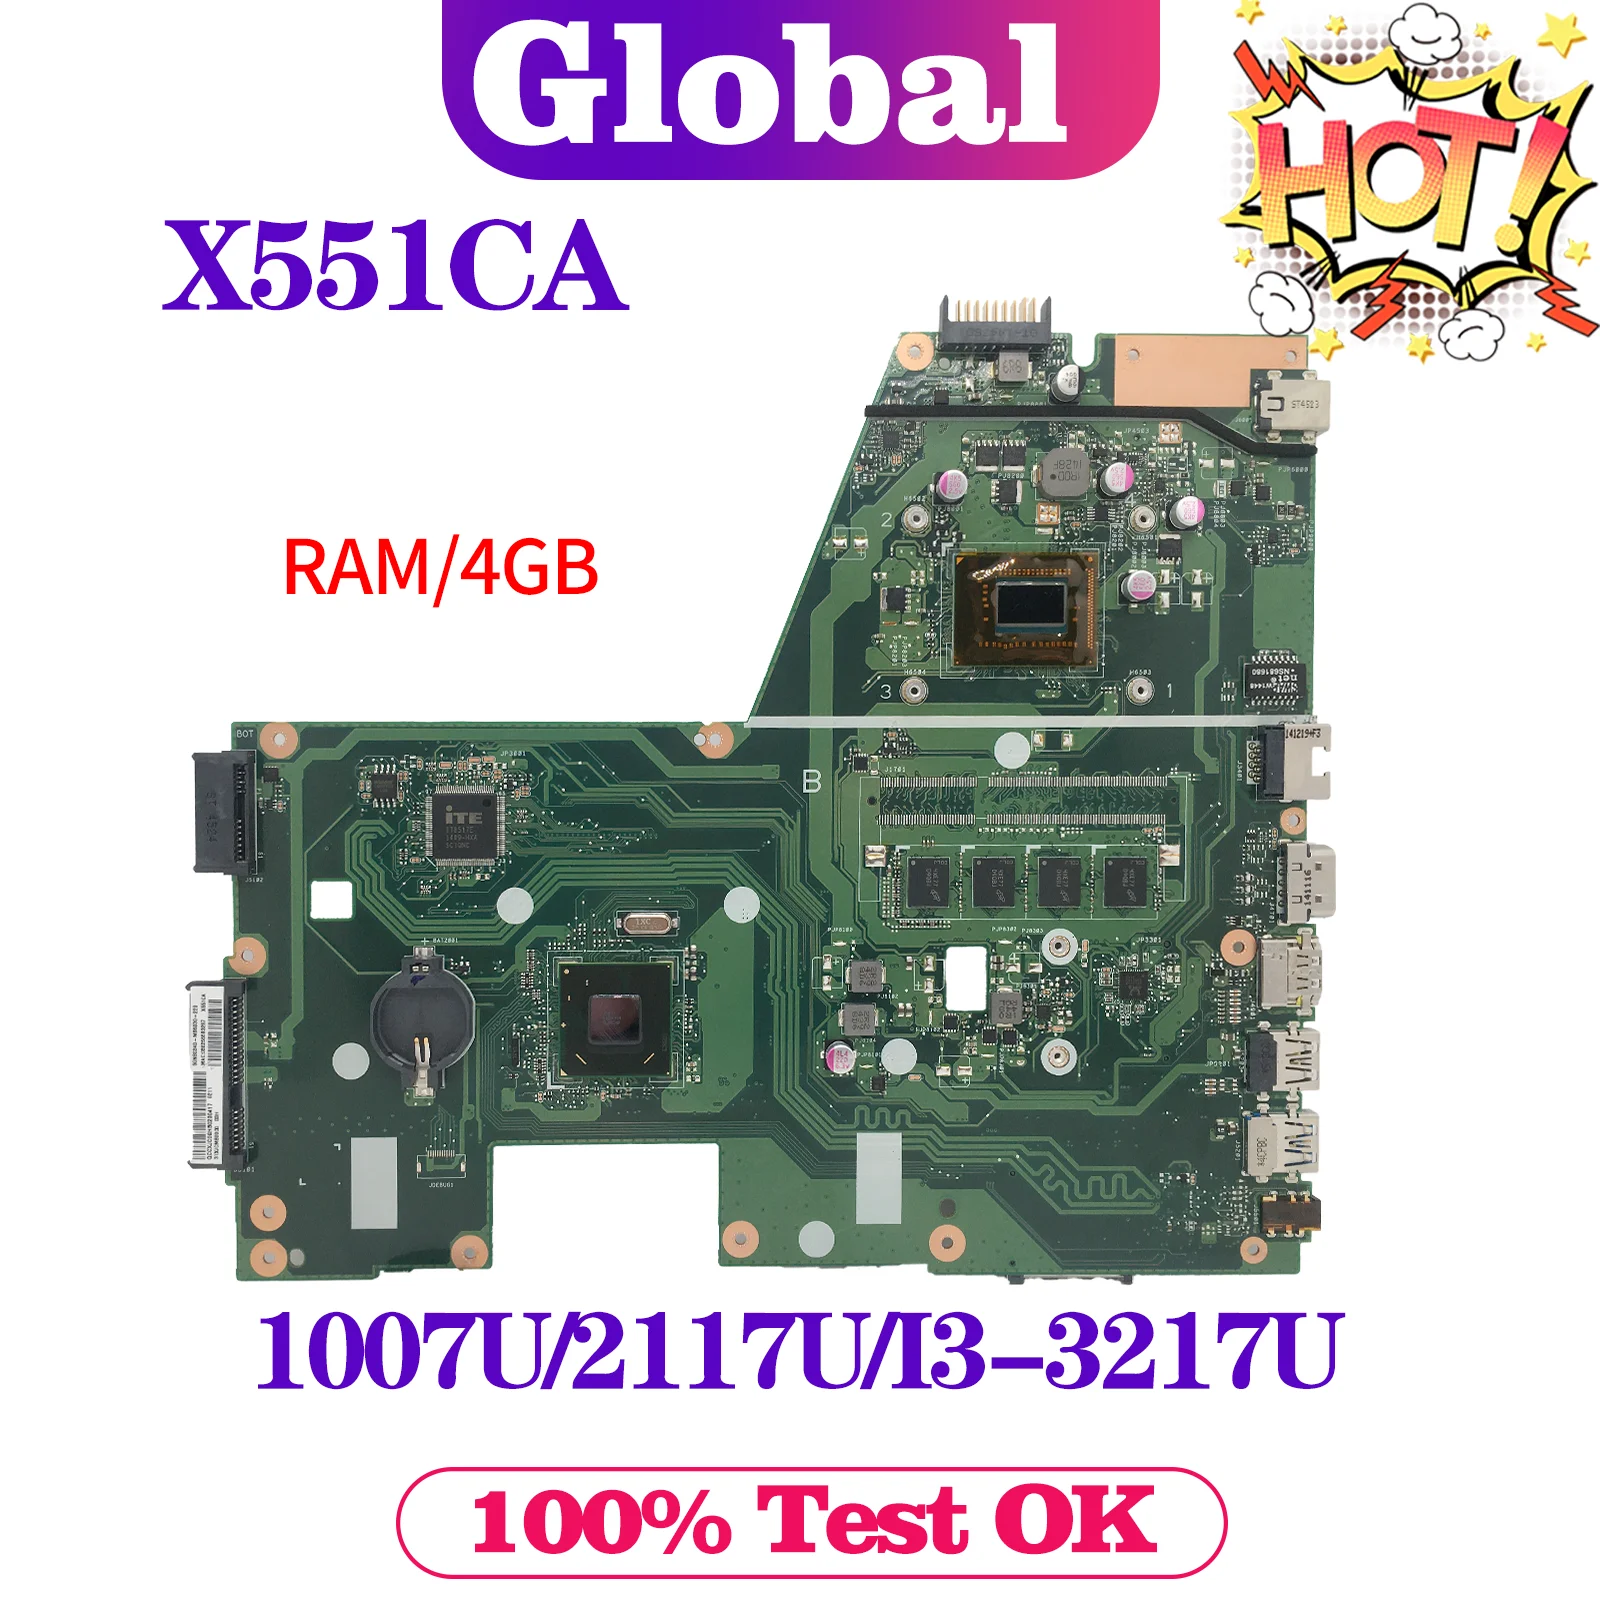 NEW! X551C For ASUS X551CA X551CAP F551C F551CA R512C R512CA Laptop Motherboard Original Mainboard 1007U/2117U/I3-2317U 4G-RAM